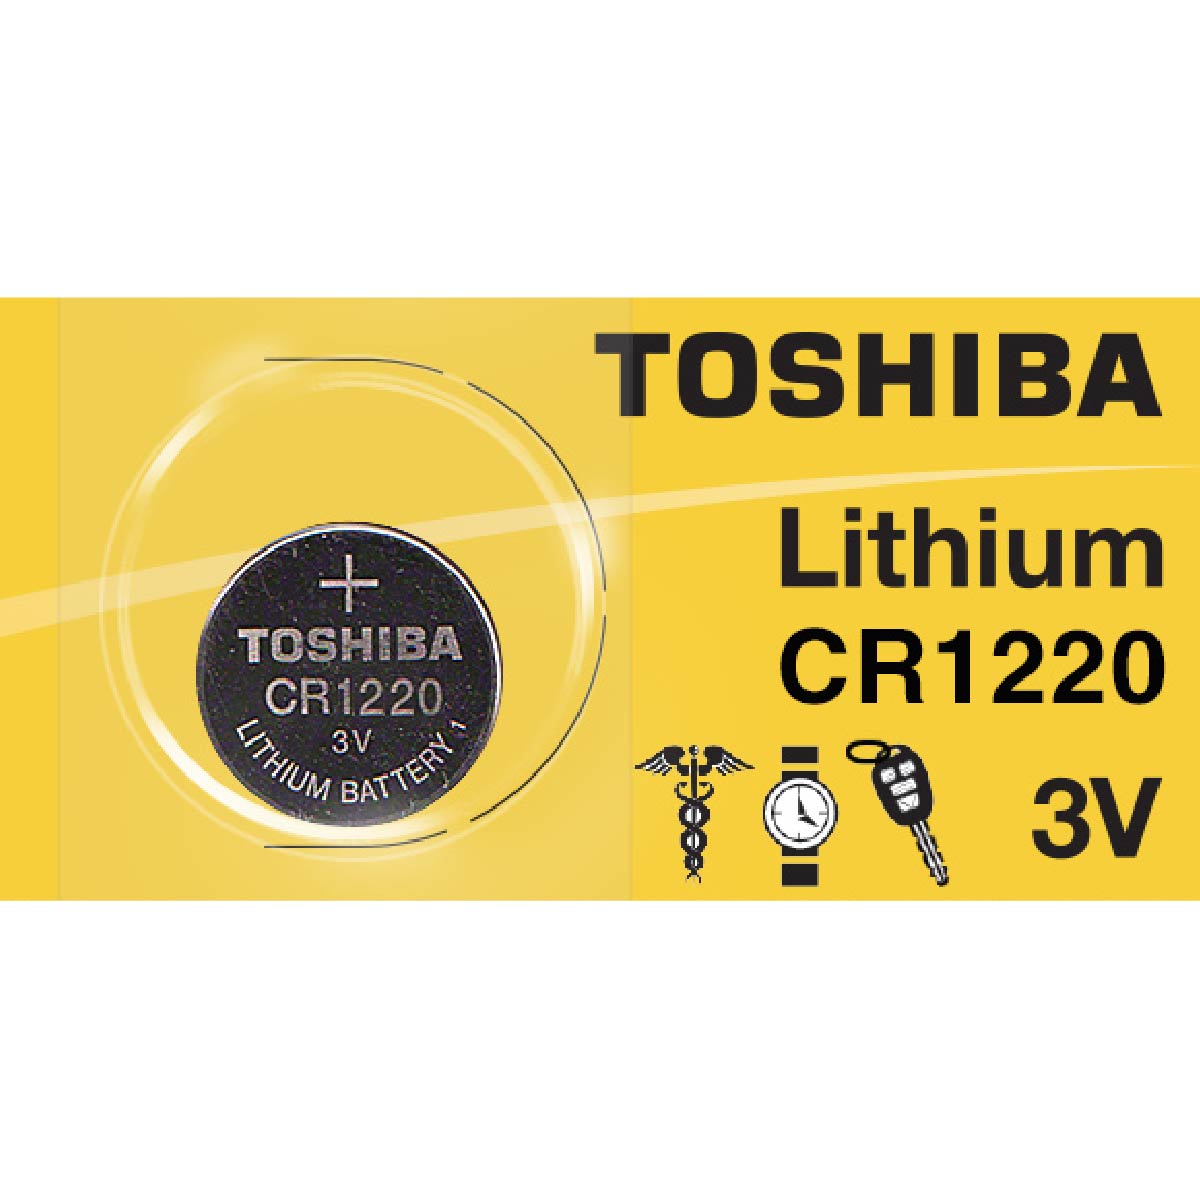 Toshiba CR1220 Lithium Coin Cell Battery 3v, Tear Strip